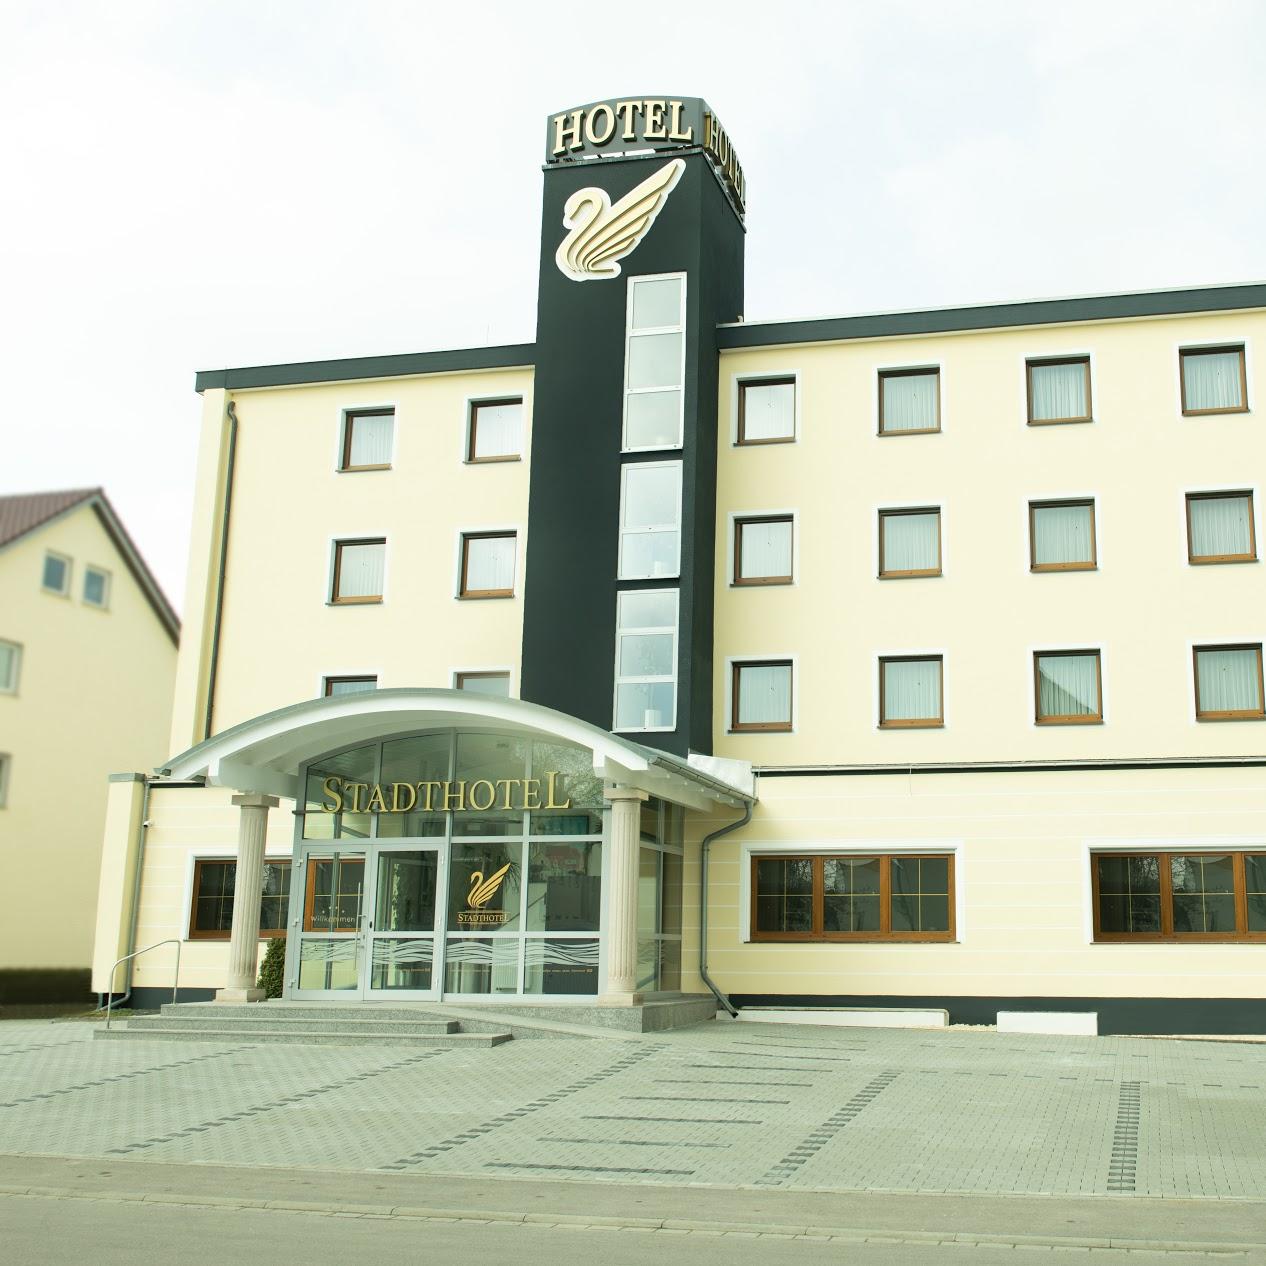 Restaurant "Stadthotel Giengen" in Giengen an der Brenz